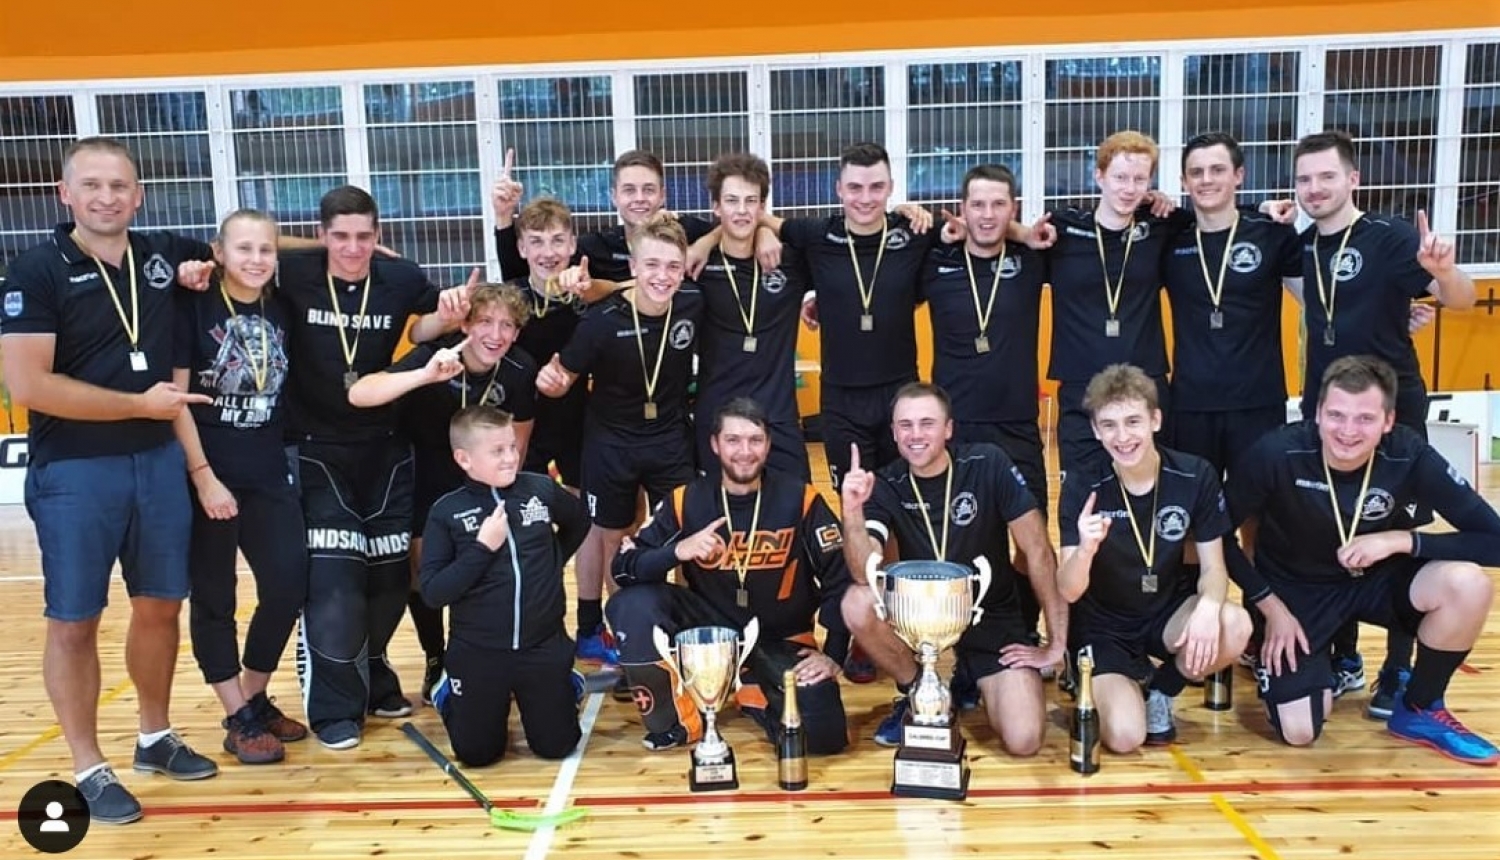 FK “Ogres Vilki” triumfē turnīrā “Salming cup 2019”